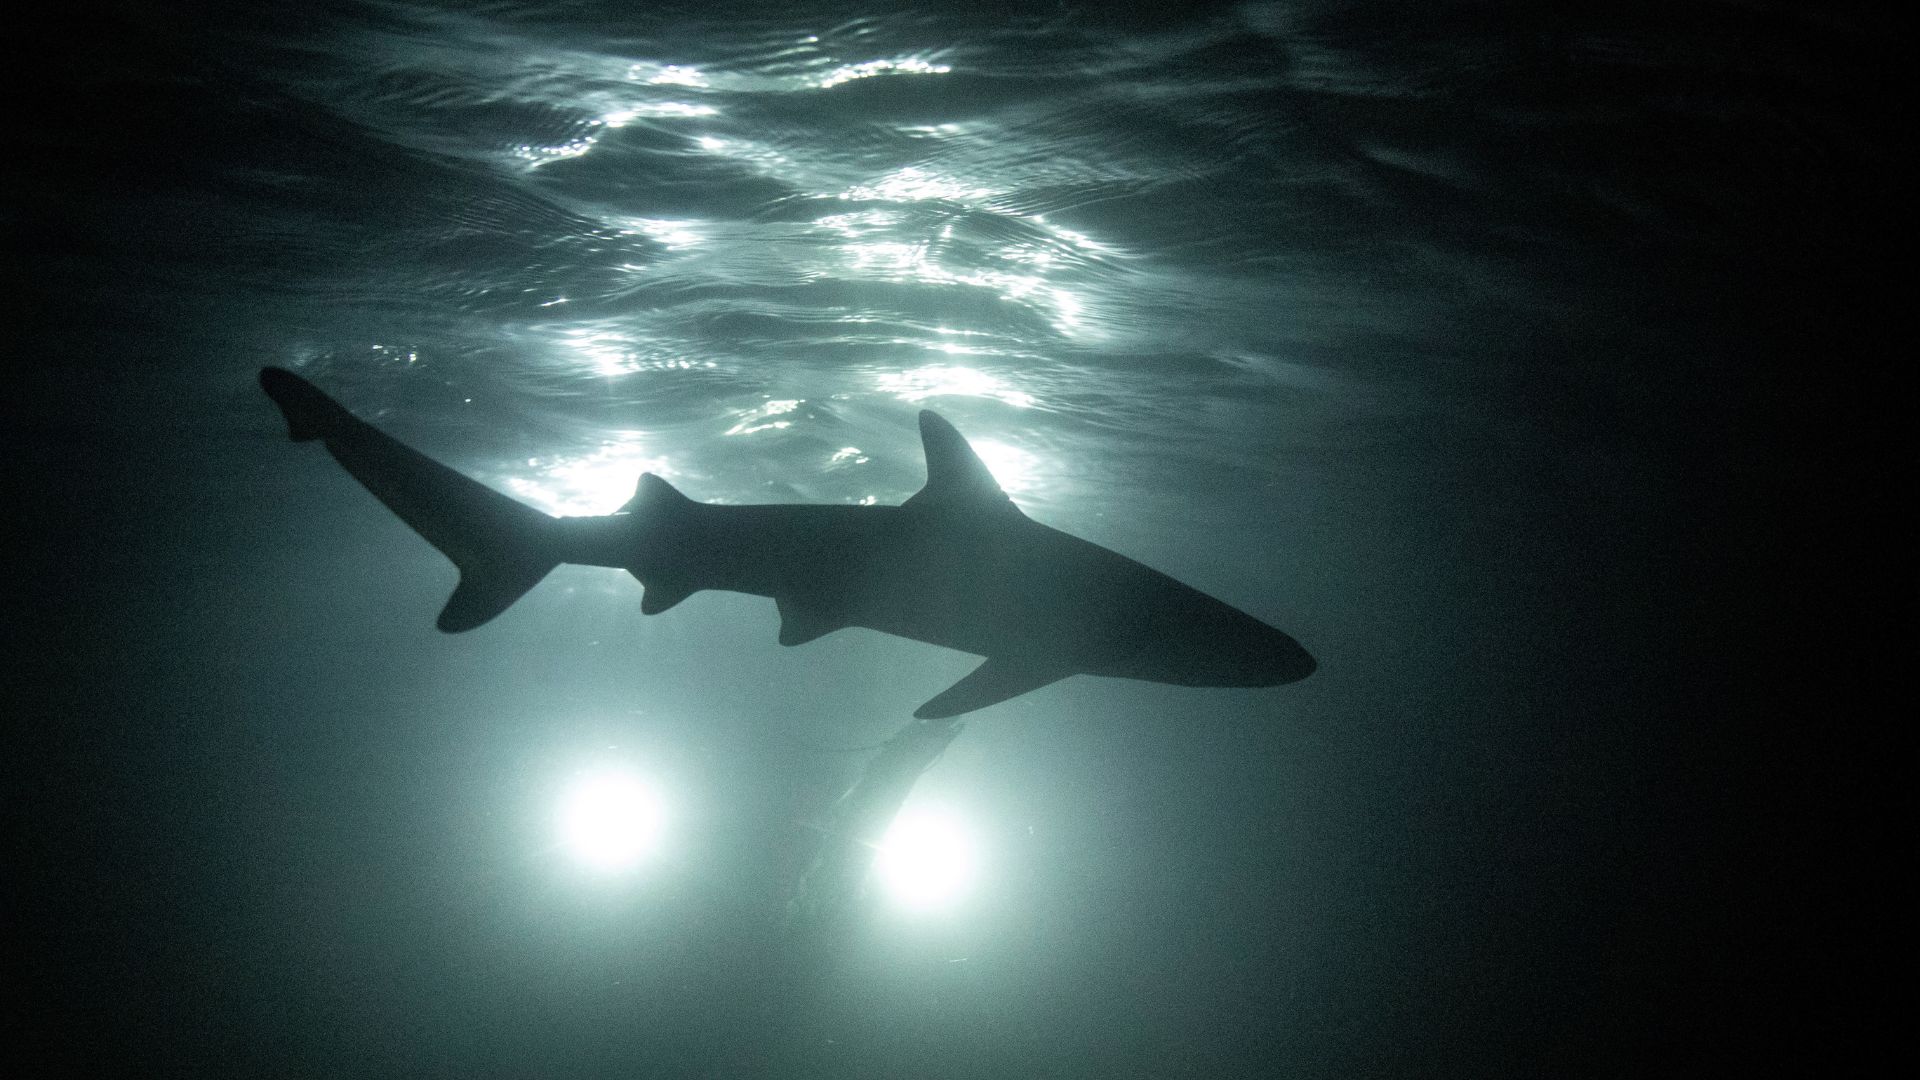 Sharks, tourists jostle for space around Thai destination island